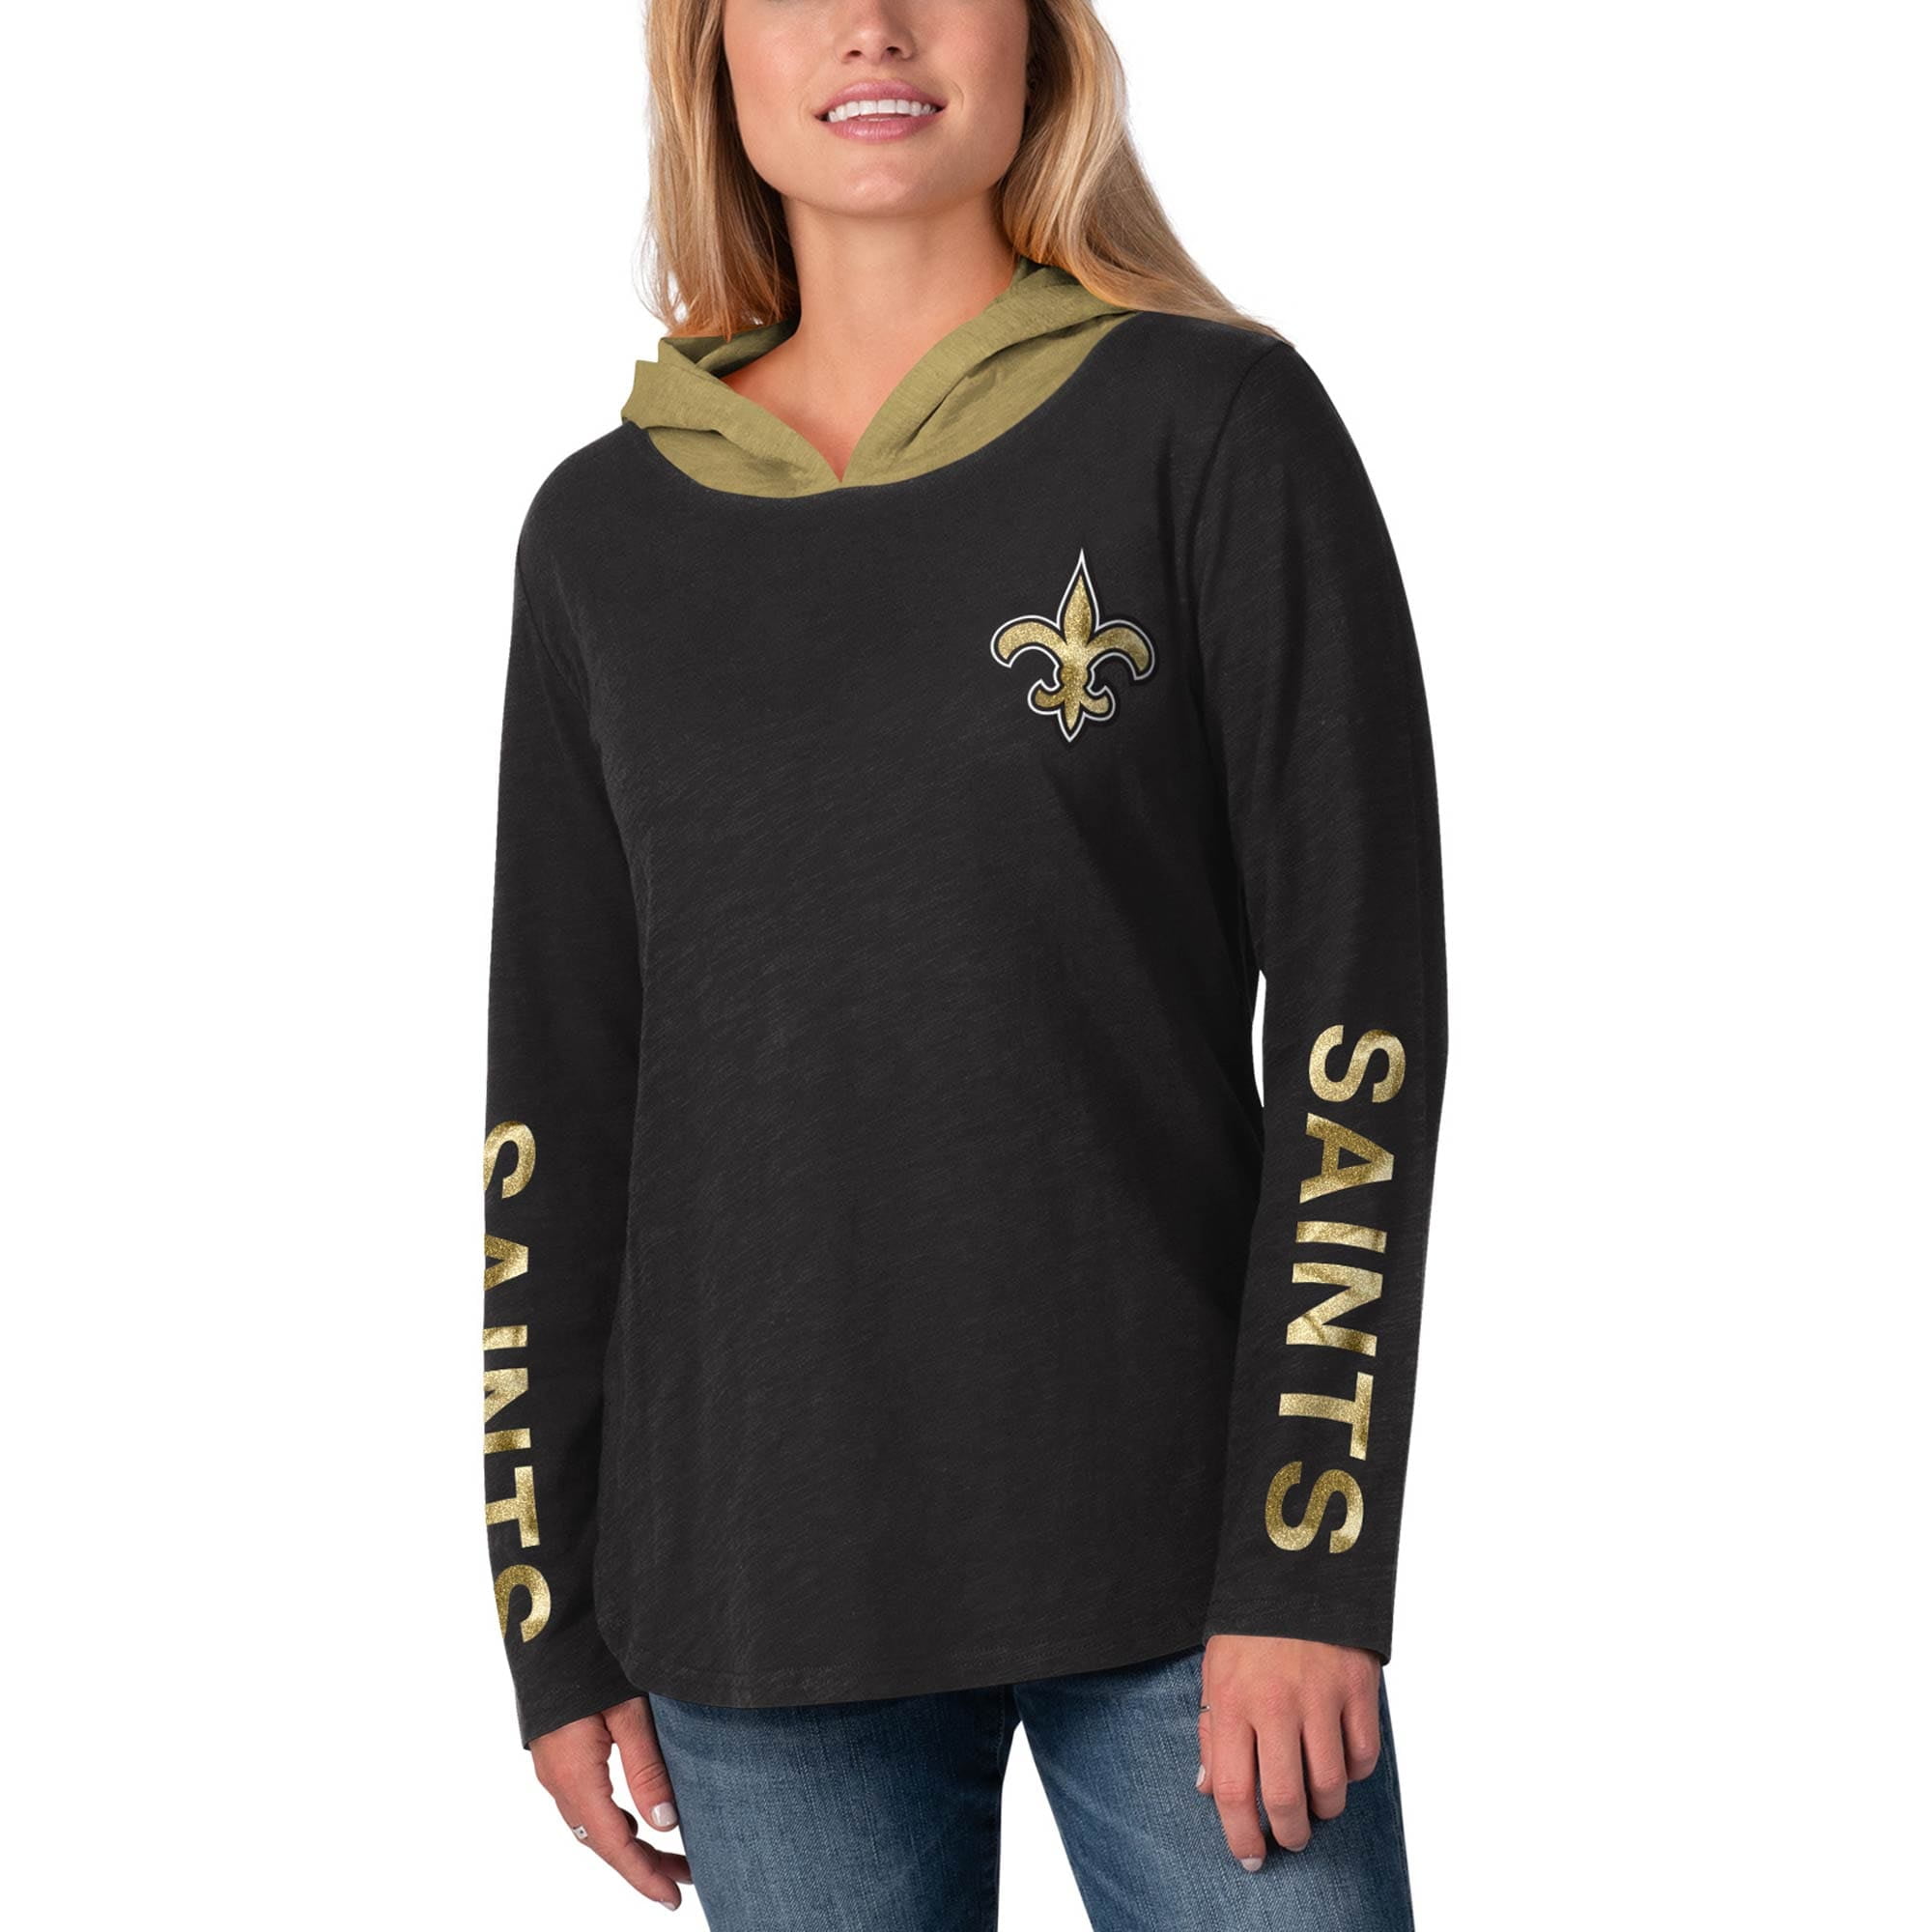 new orleans saints women's sweatshirt